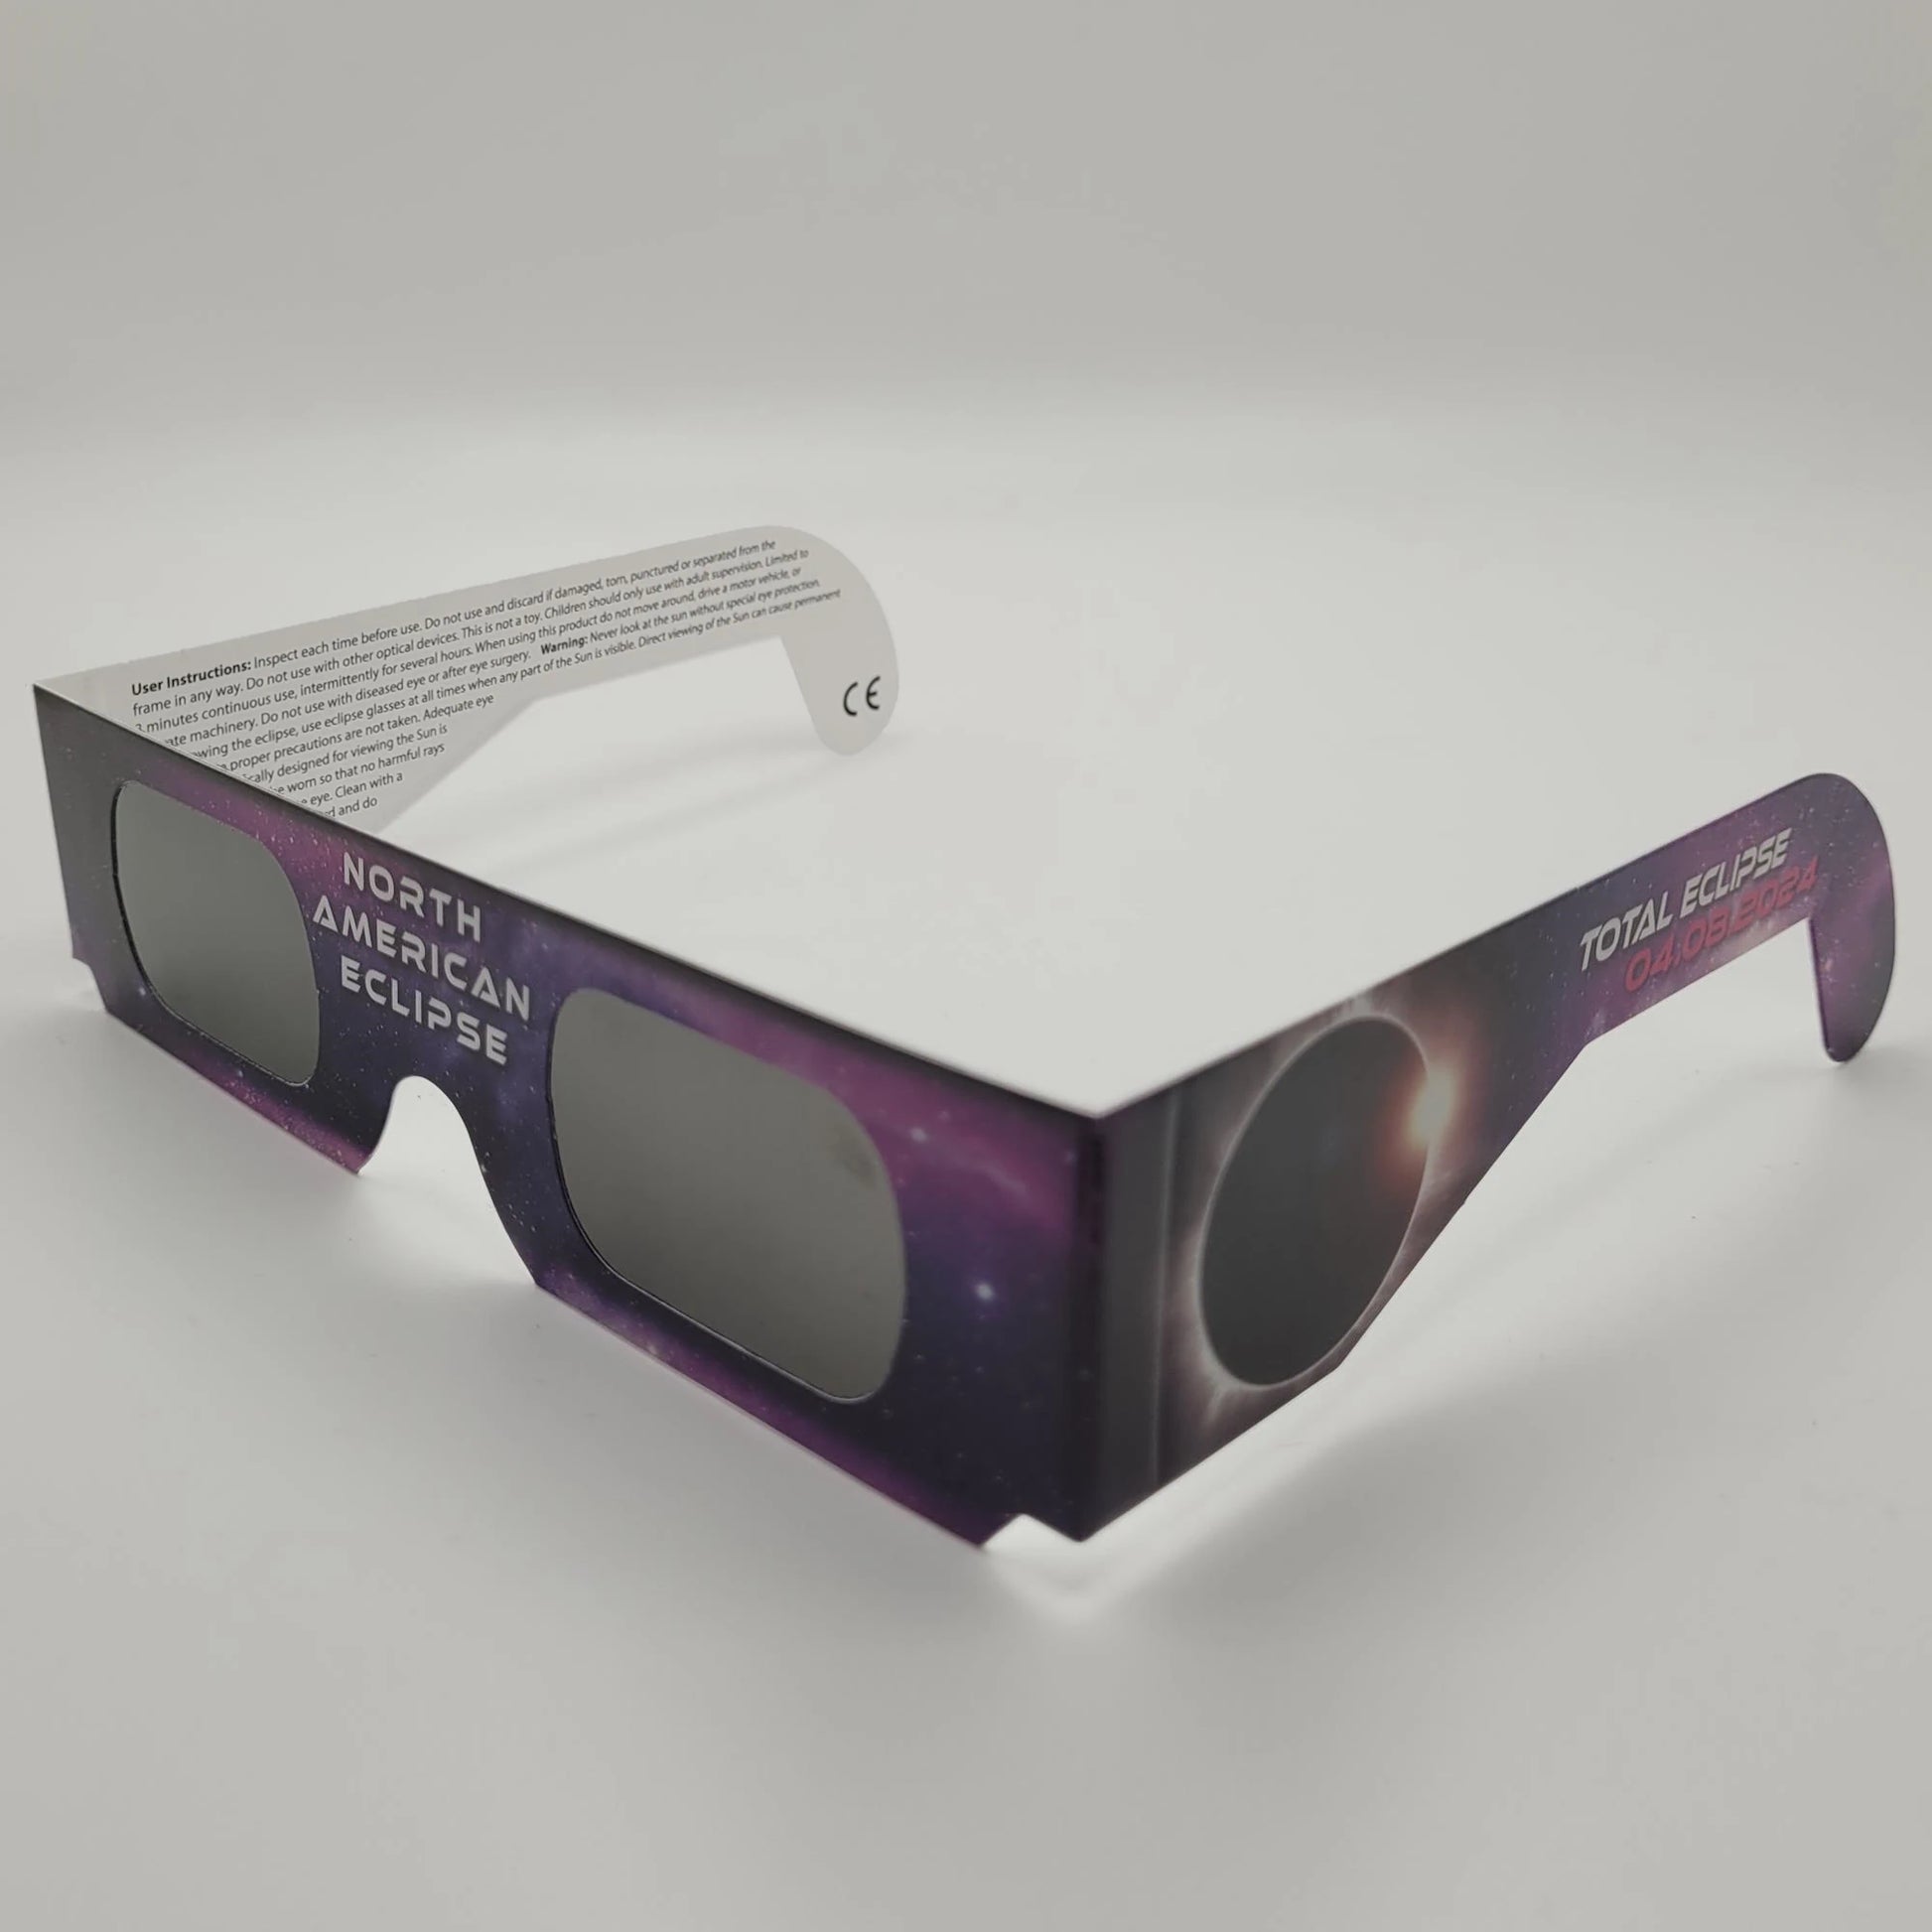 A single pair of purple solar eclipse glasses.